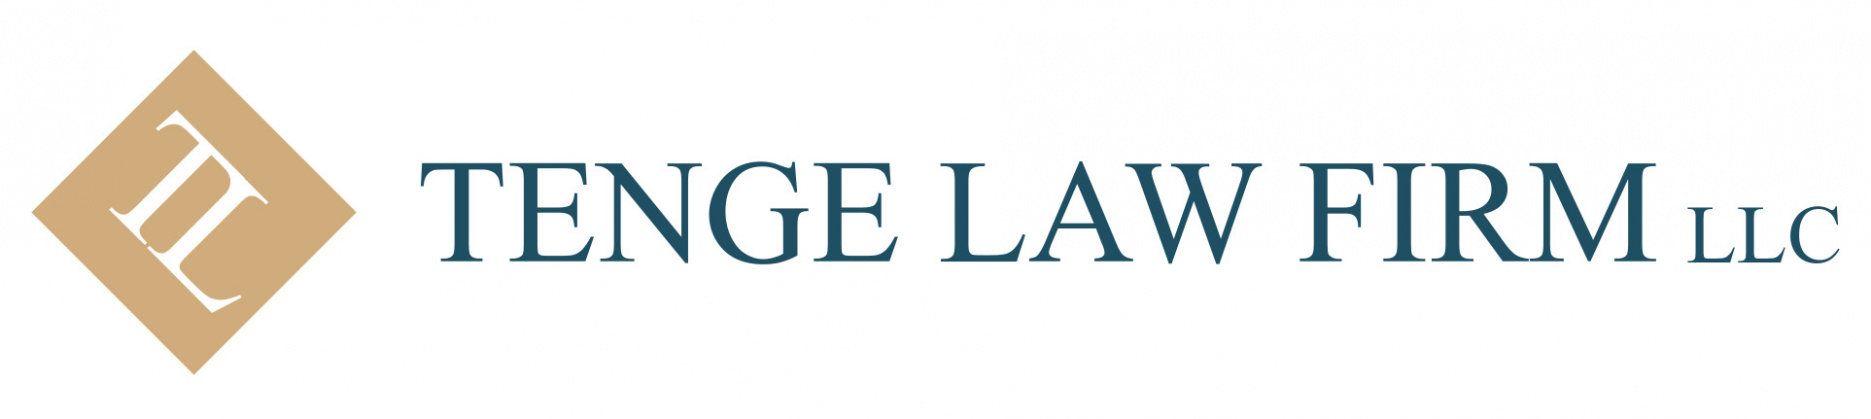 3036652929 Tenge Law Firm LLC